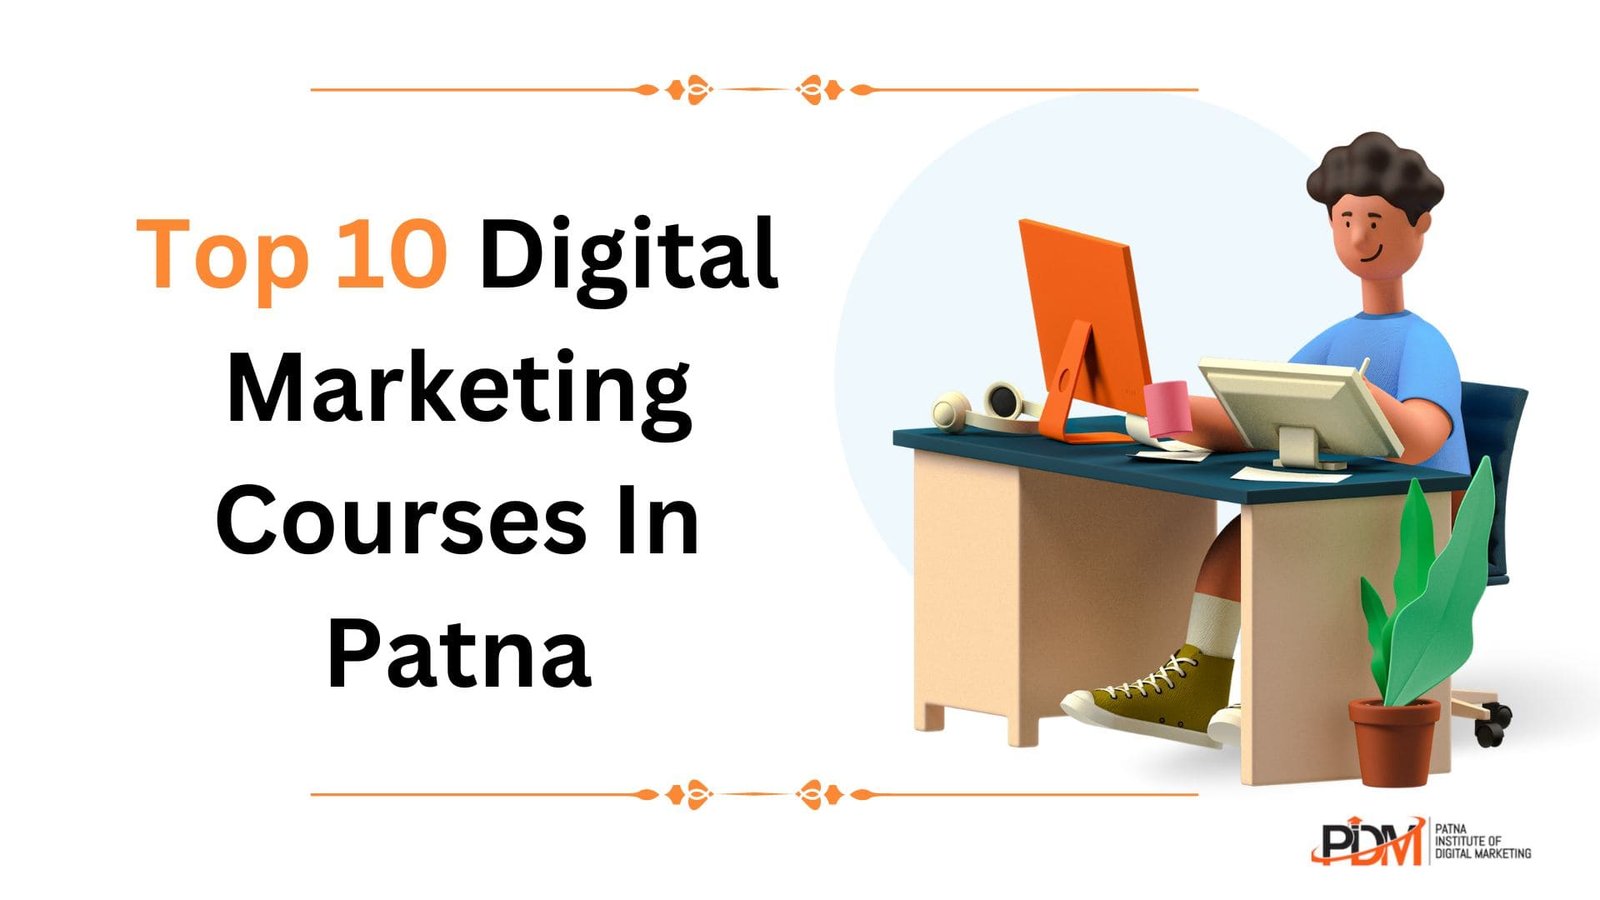 Top 10 Digital Marketing Courses In Patna